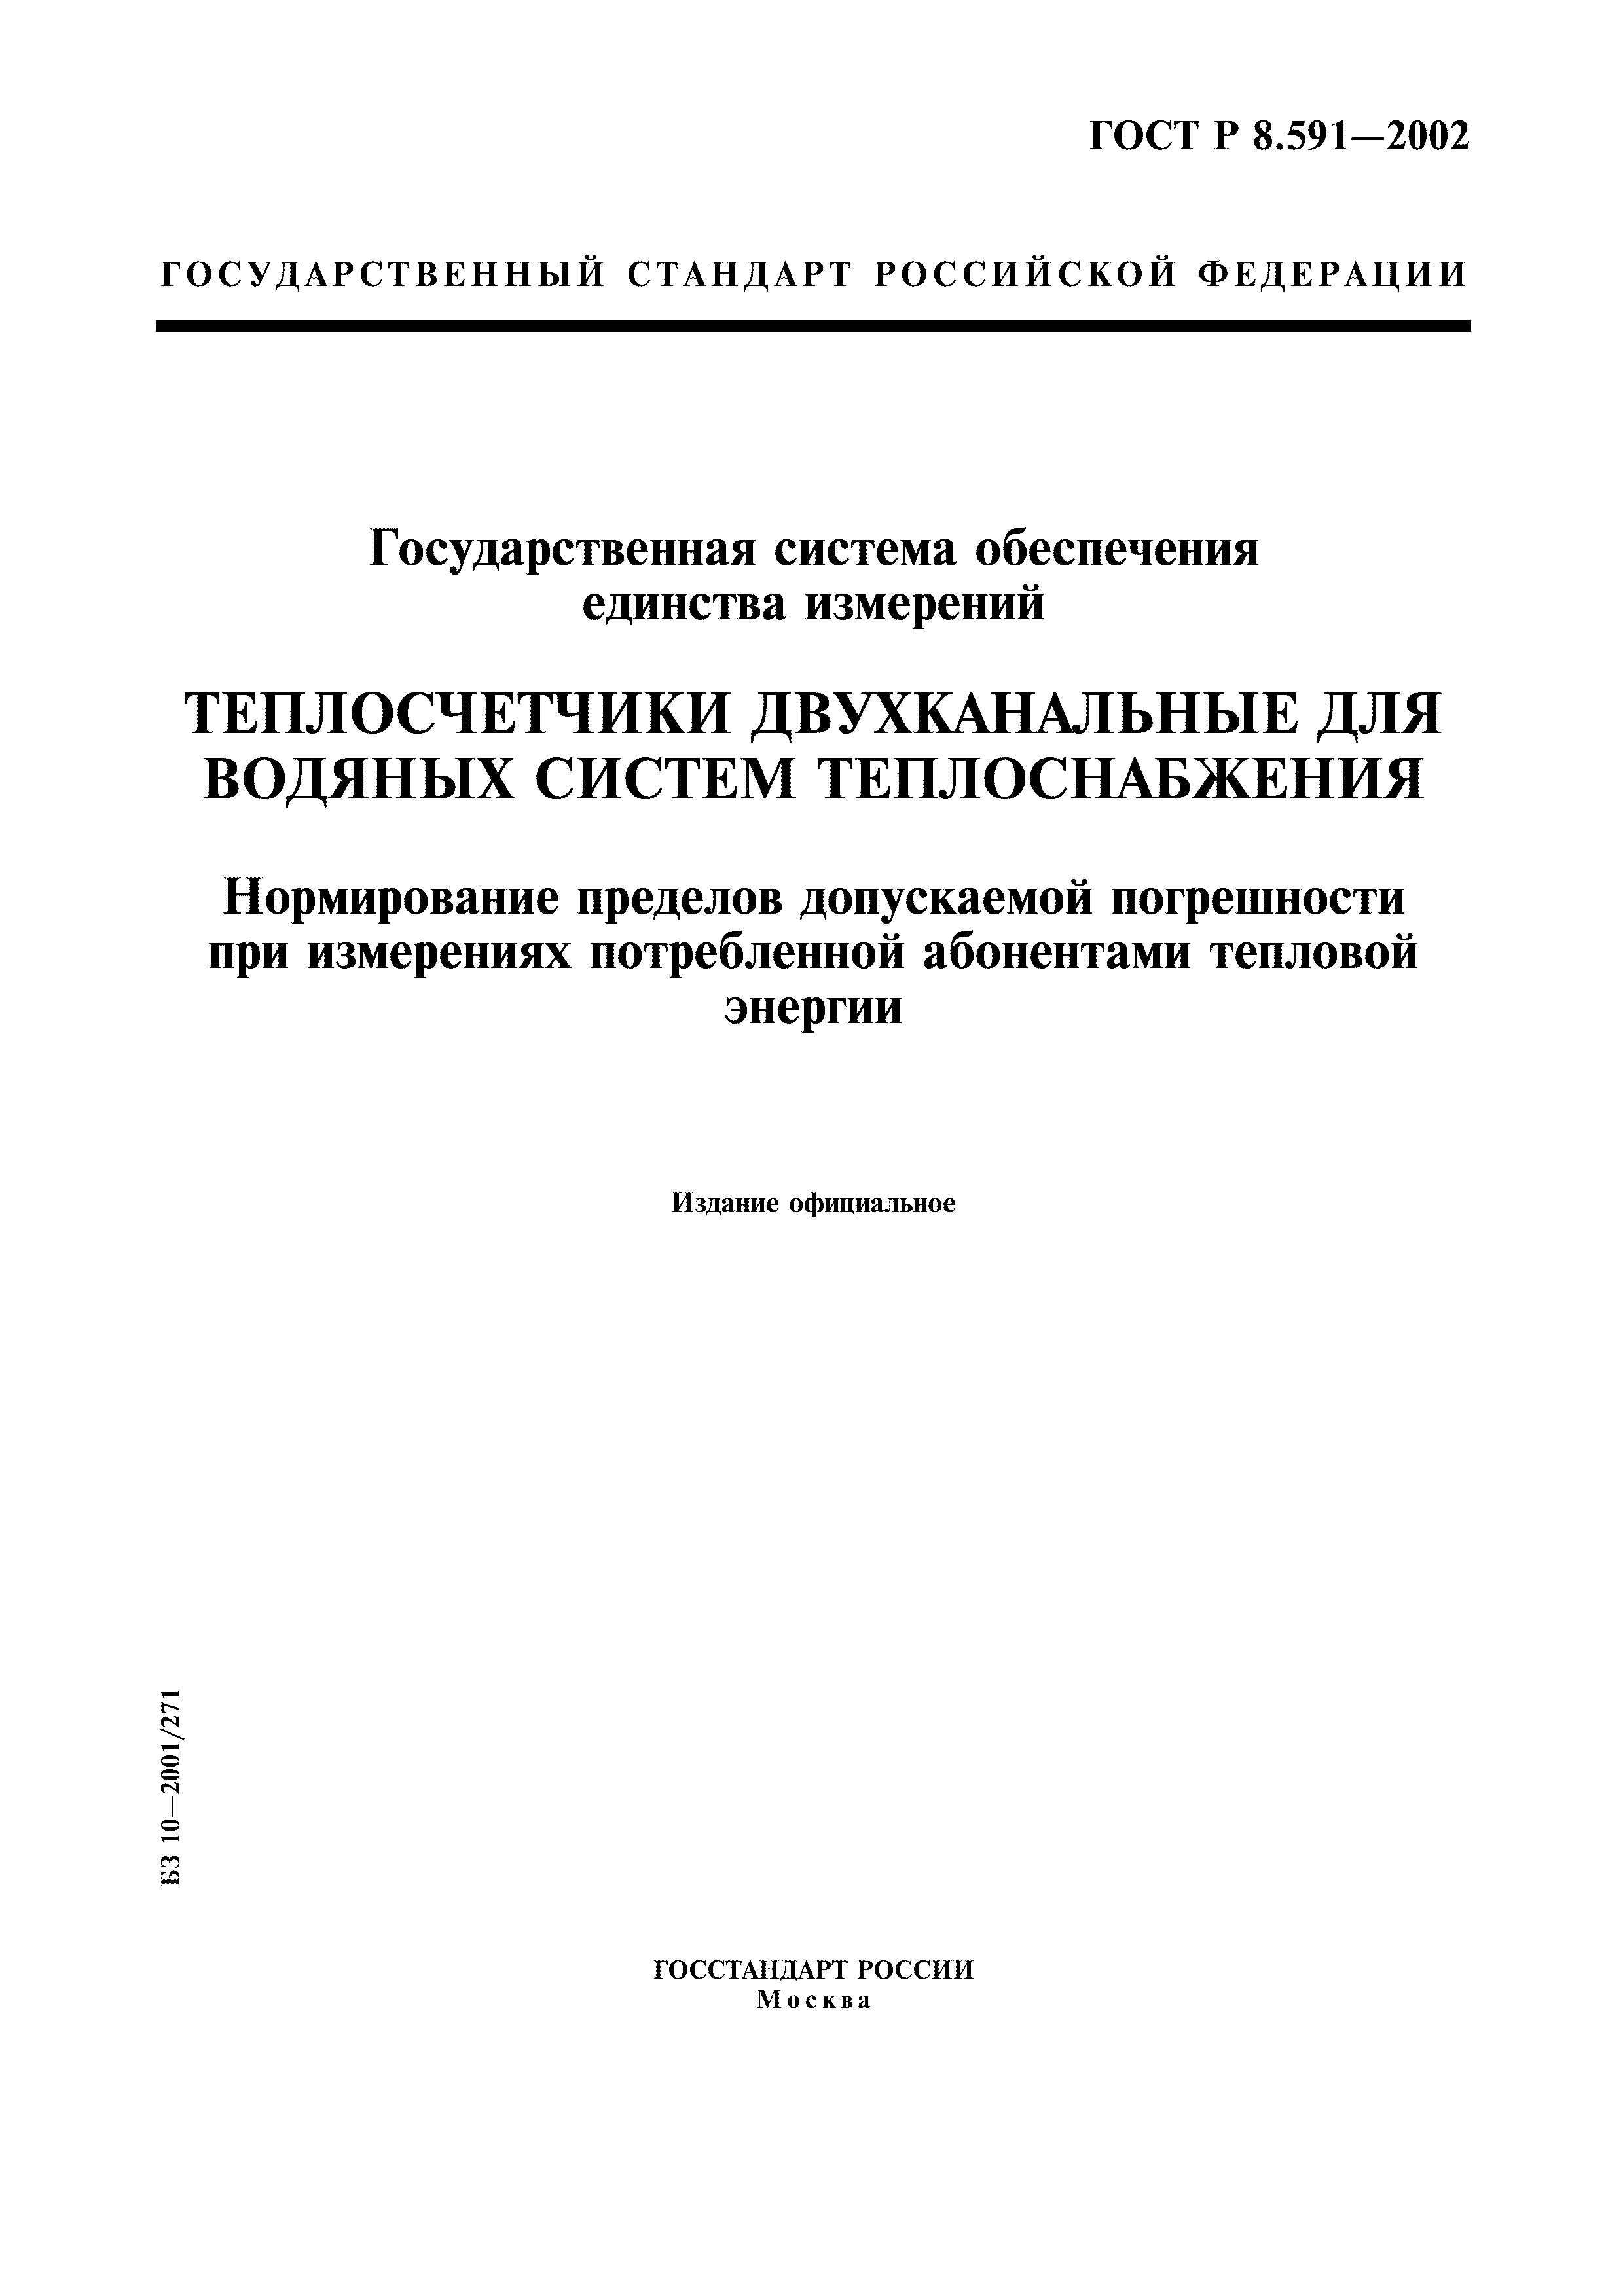 ГОСТ Р 8.591-2002